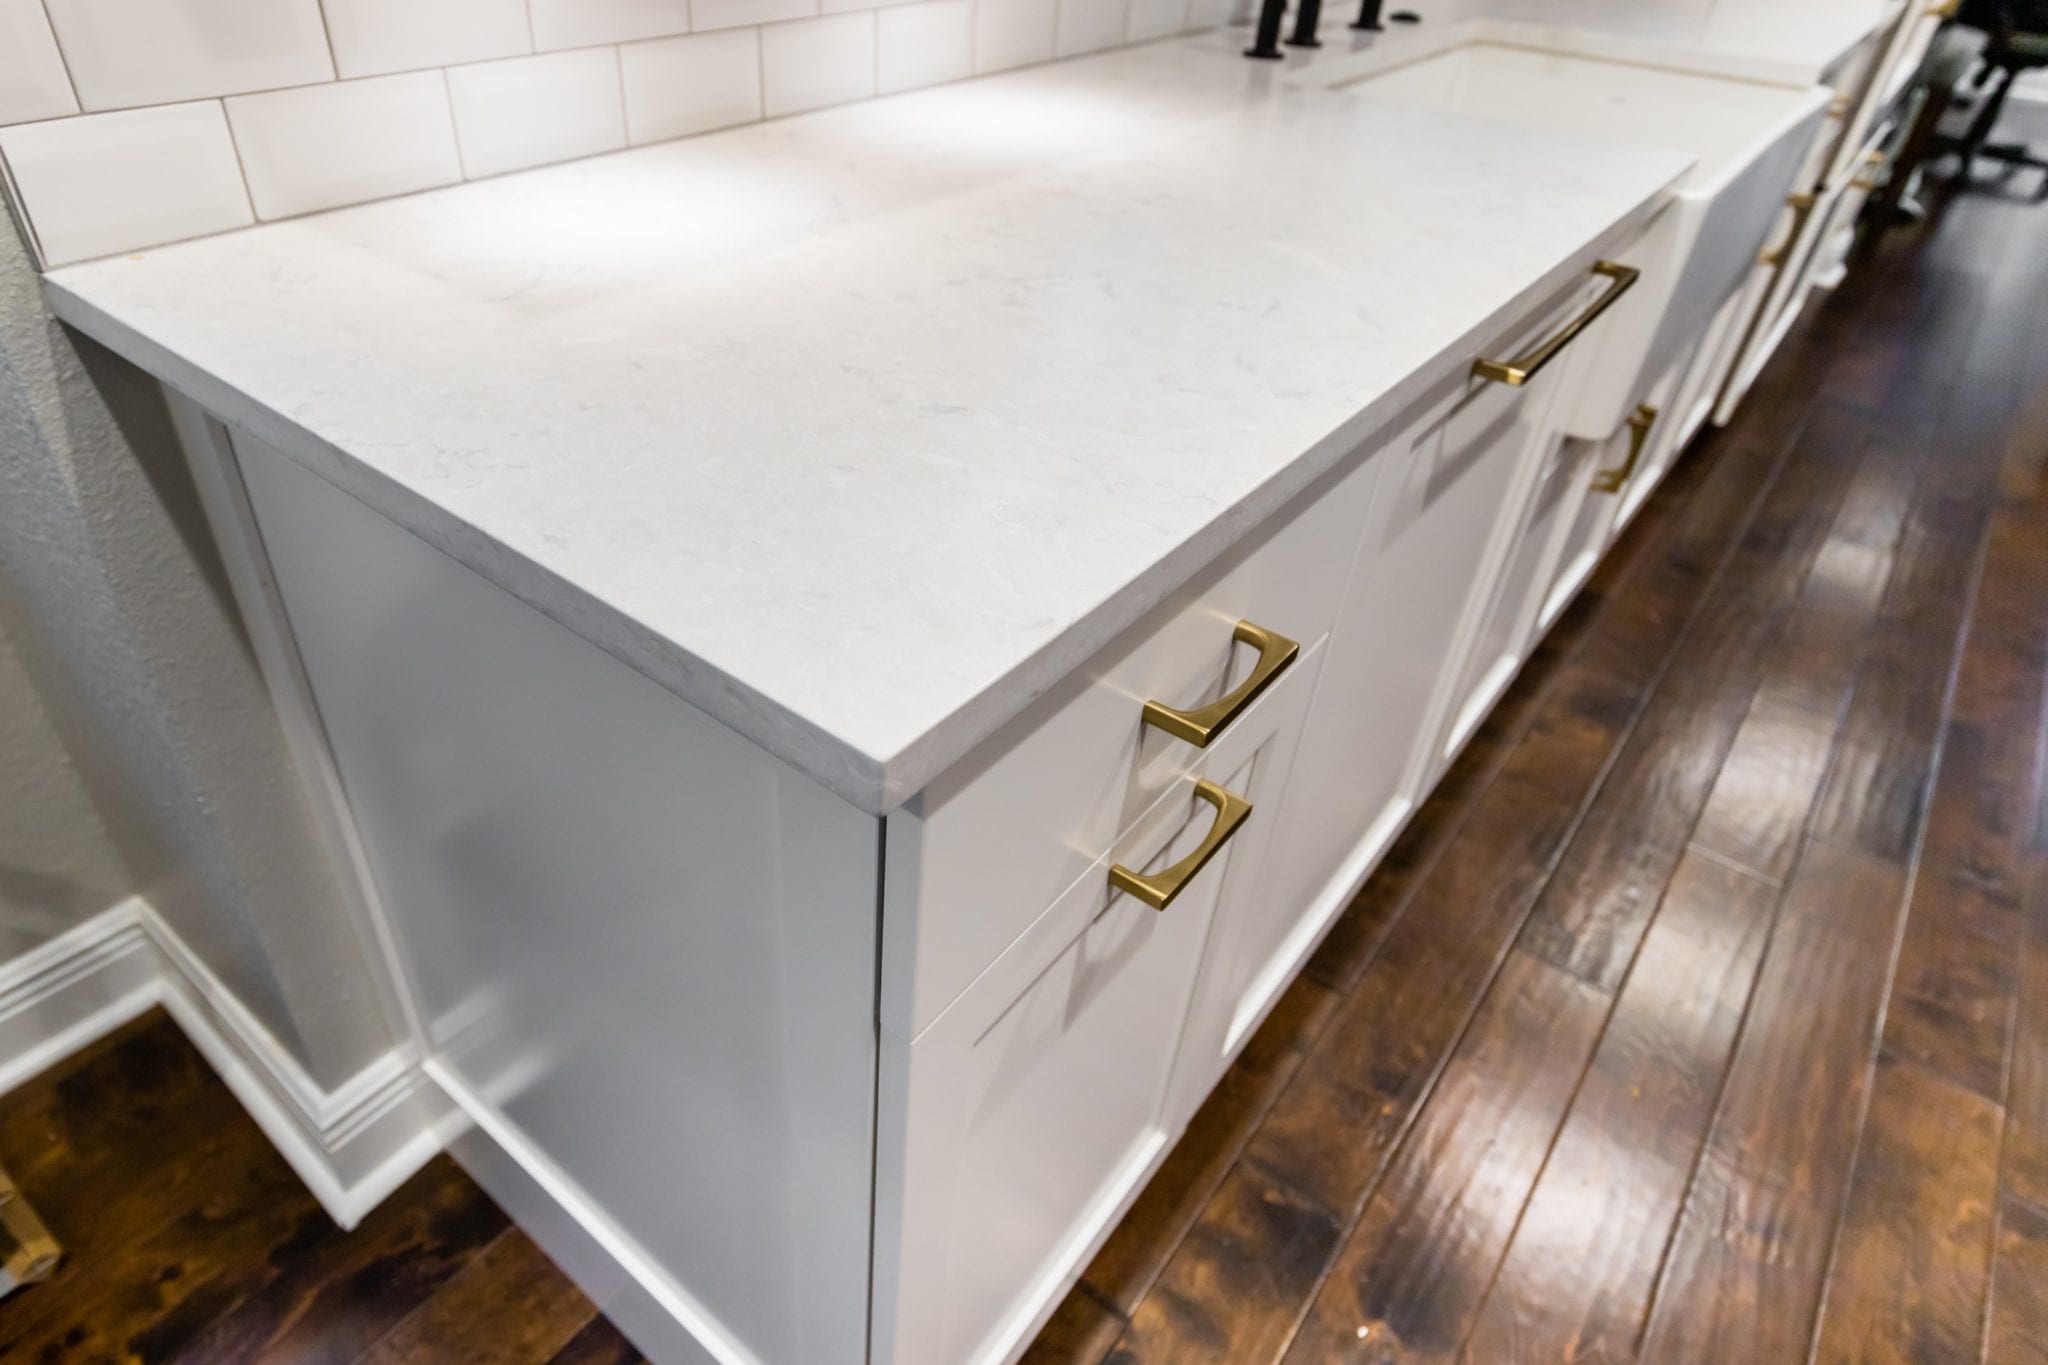 Single-Family-Home-Kitchen-Remodel-Custom-Cabinets-Countertops-New-Wood-Floors-HighlandMeadows-75238_1 (1)